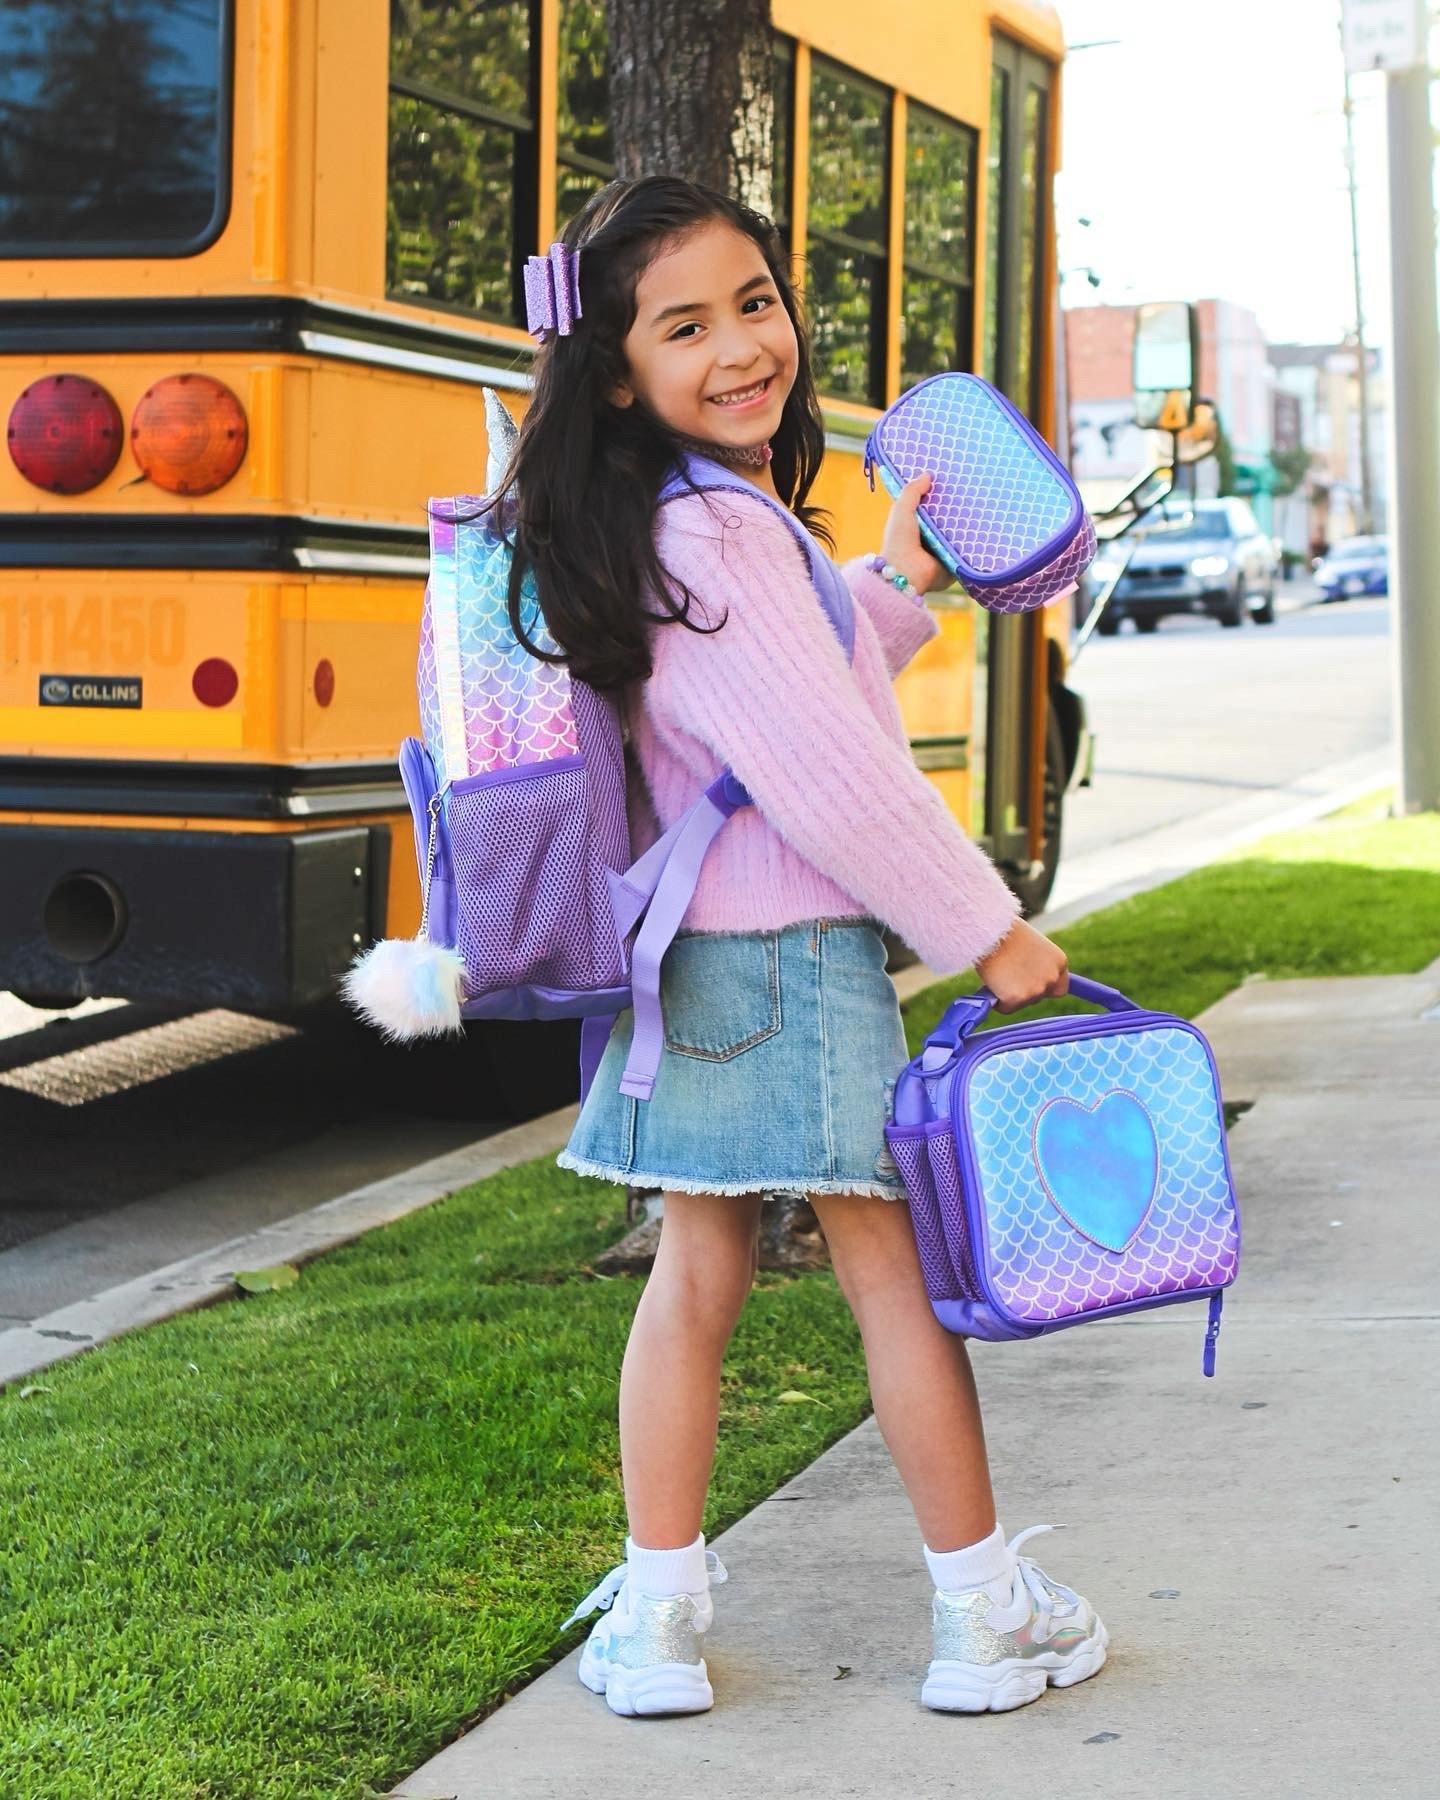 Mermaid Kids World Full Of Princess Back To School Custom Tote Bag TH0 -  Unifamy Store